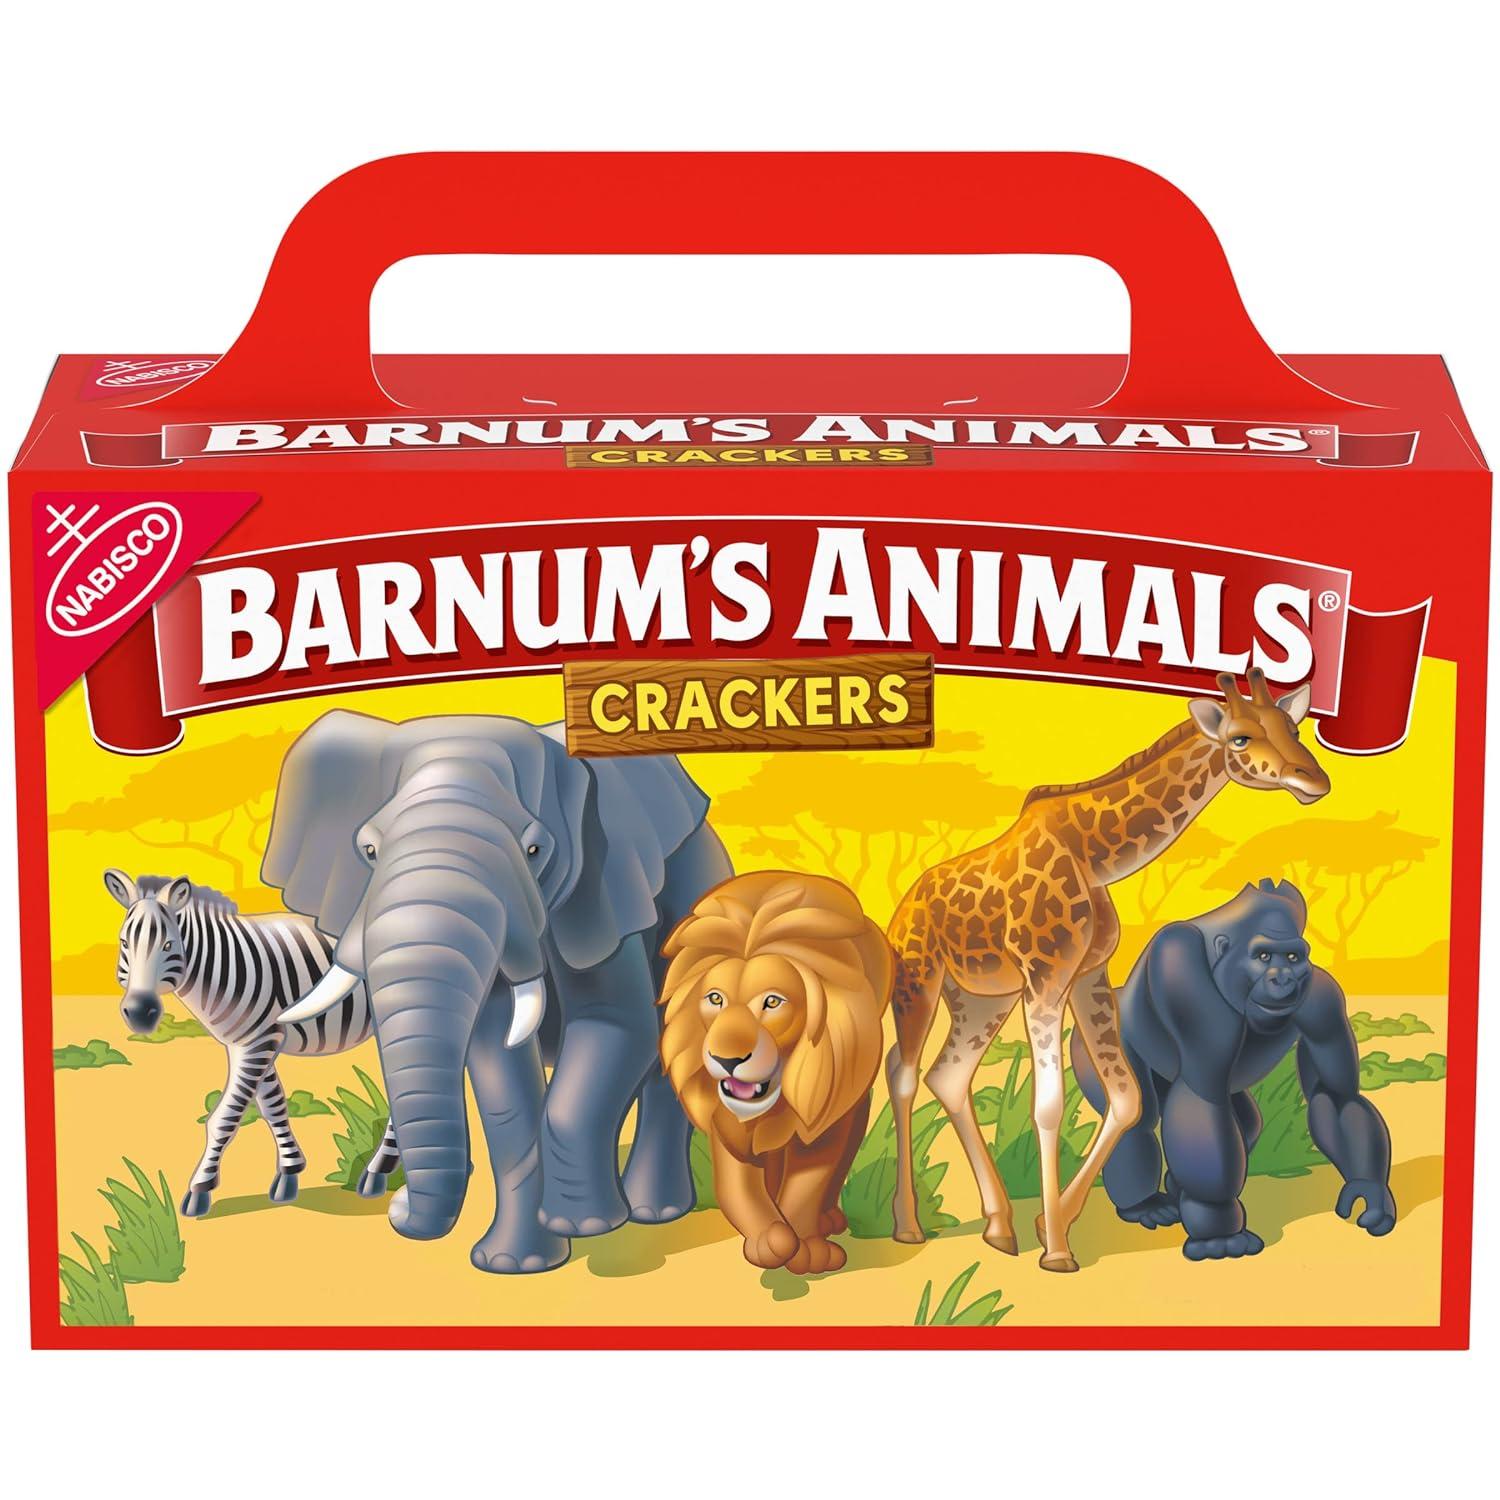 Barnum Original Animal Crackers for $1.51